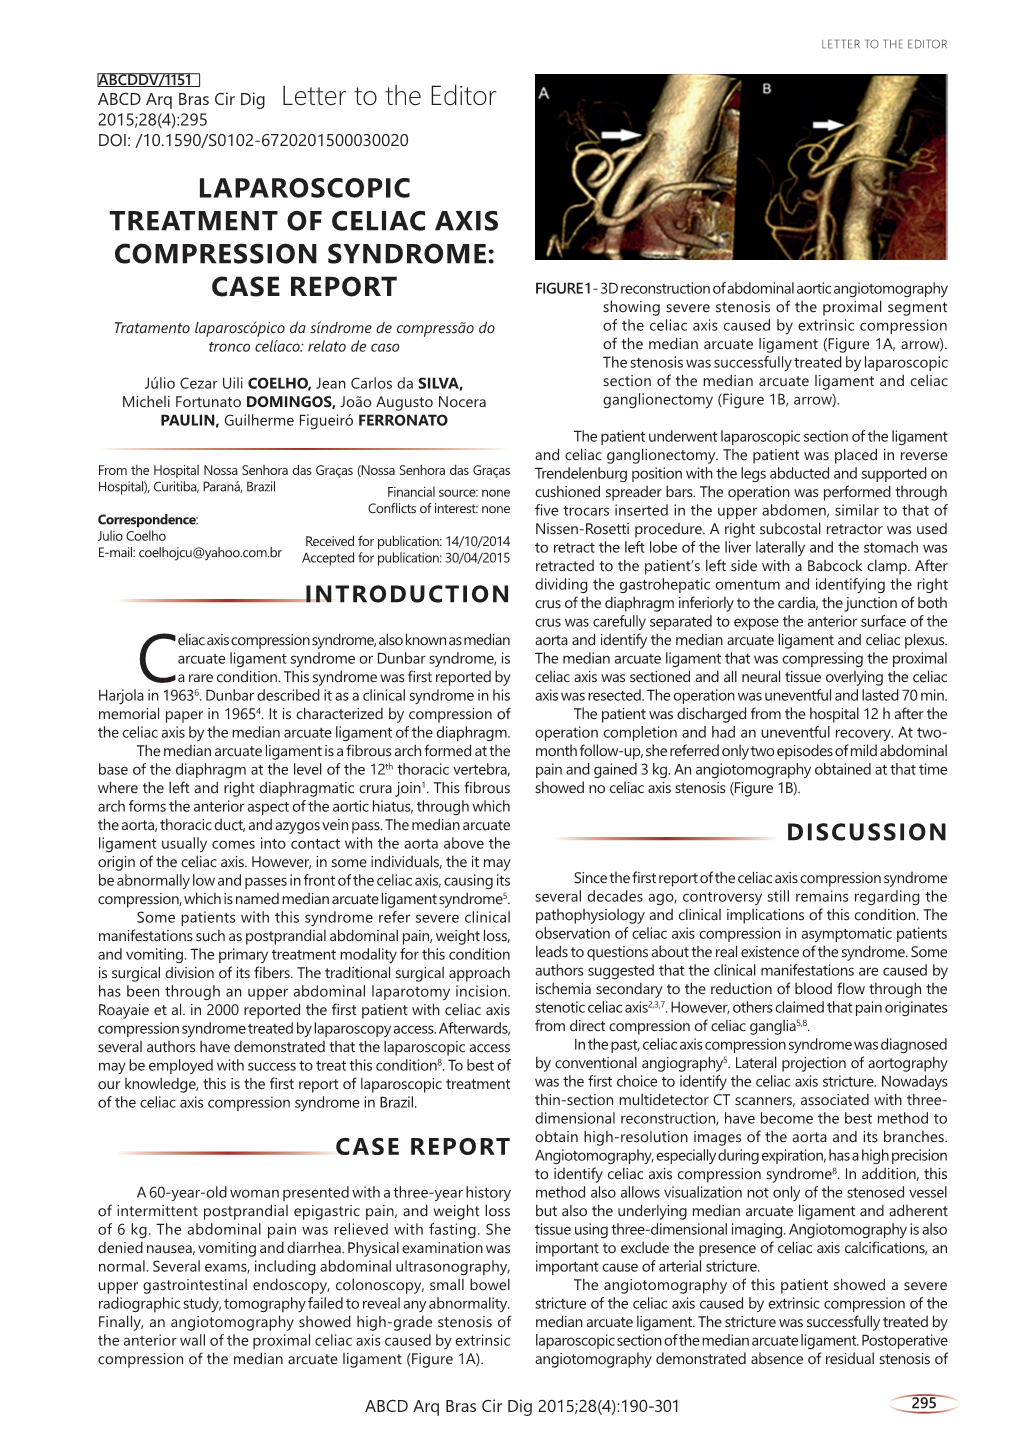 Laparoscopic Treatment of Celiac Axis Compression Syndrome: Case Report